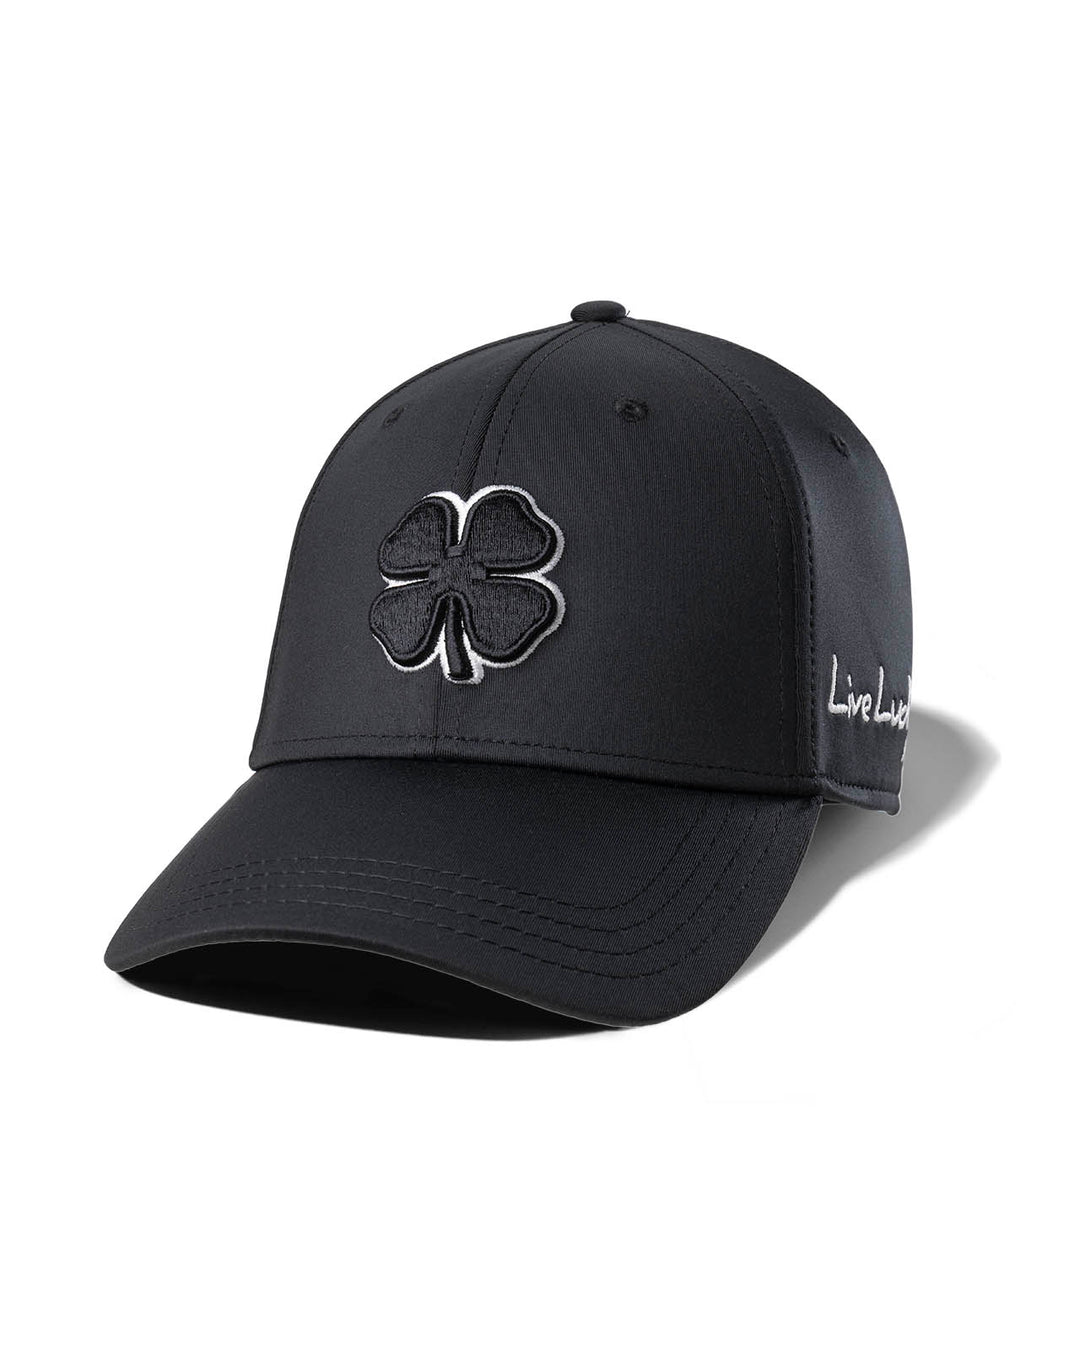 Premium Clover 2 Black Fitted Hat | Black Clover